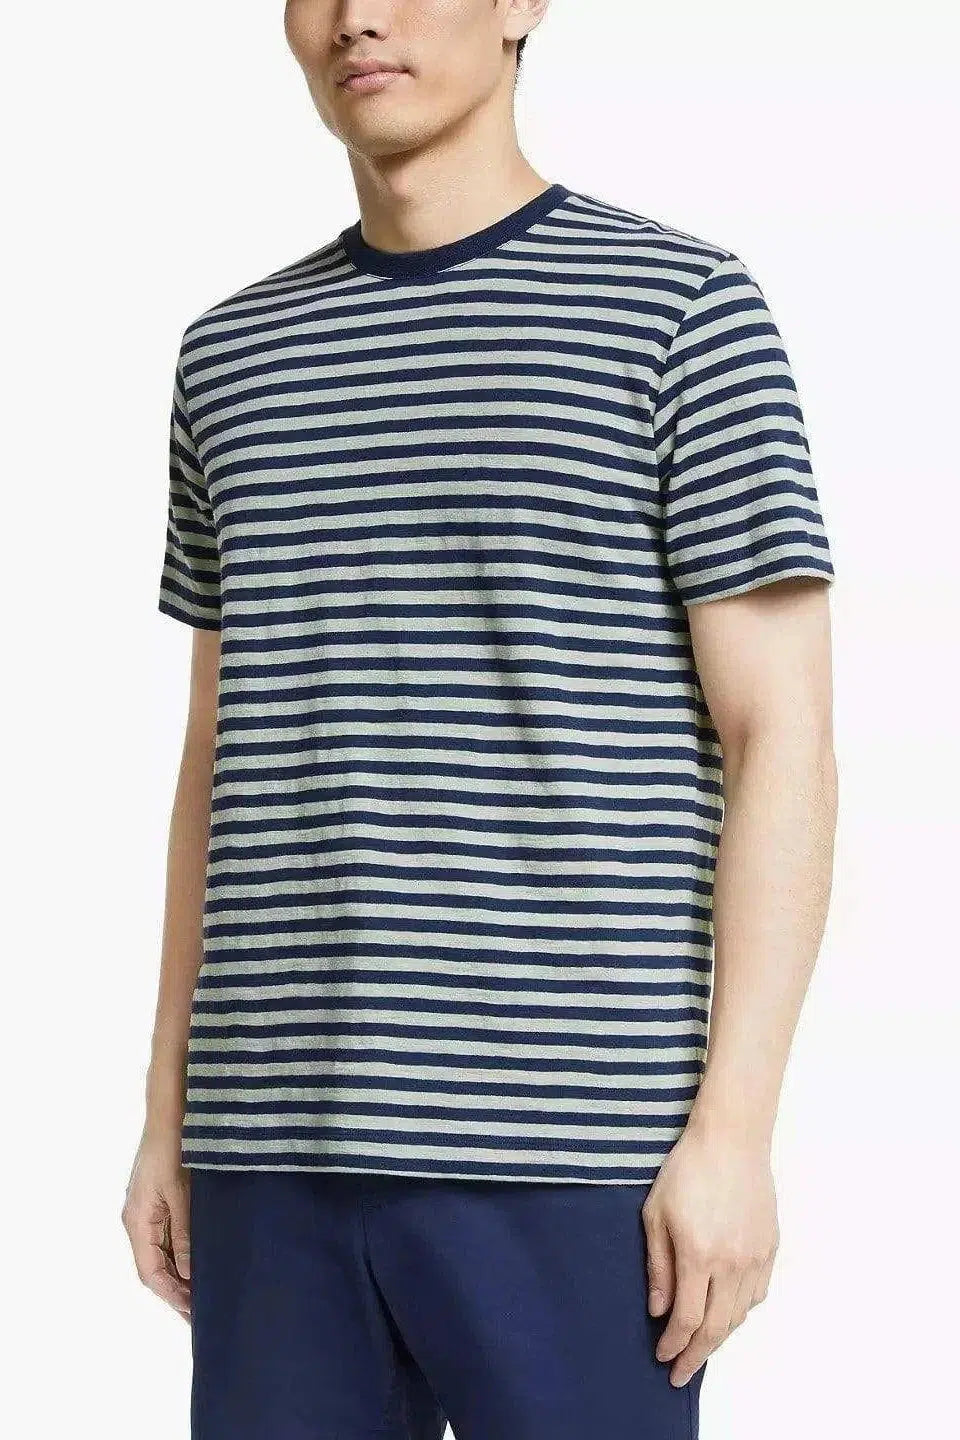 John Lewis Supima Cotton Striped T-Shirt Grey/Navy / L